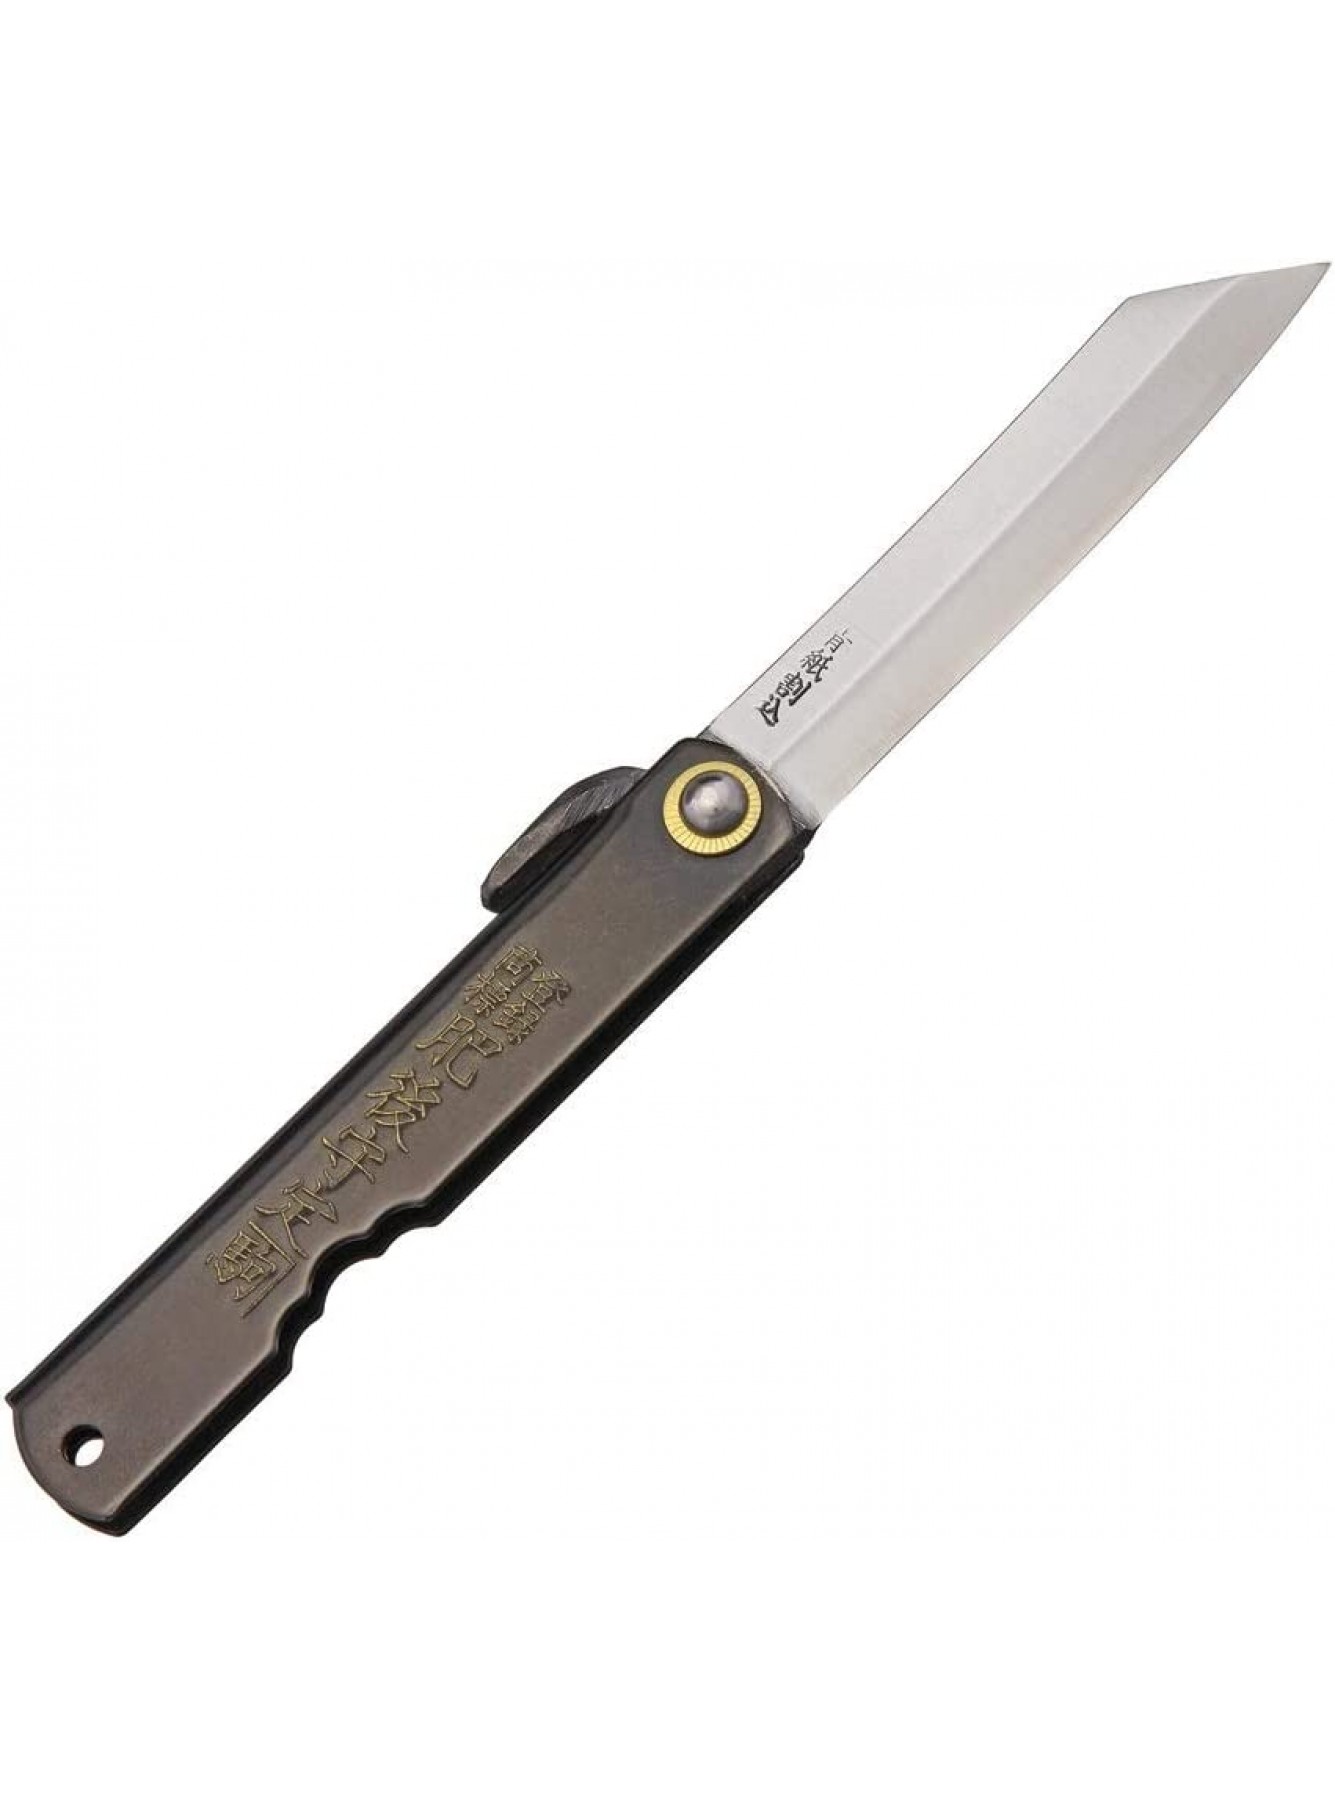 Higonokami HIGO14BL Fixed Blade,Hunting Knife,Outdoor,campingkitchen One Size B0788SWT2Z